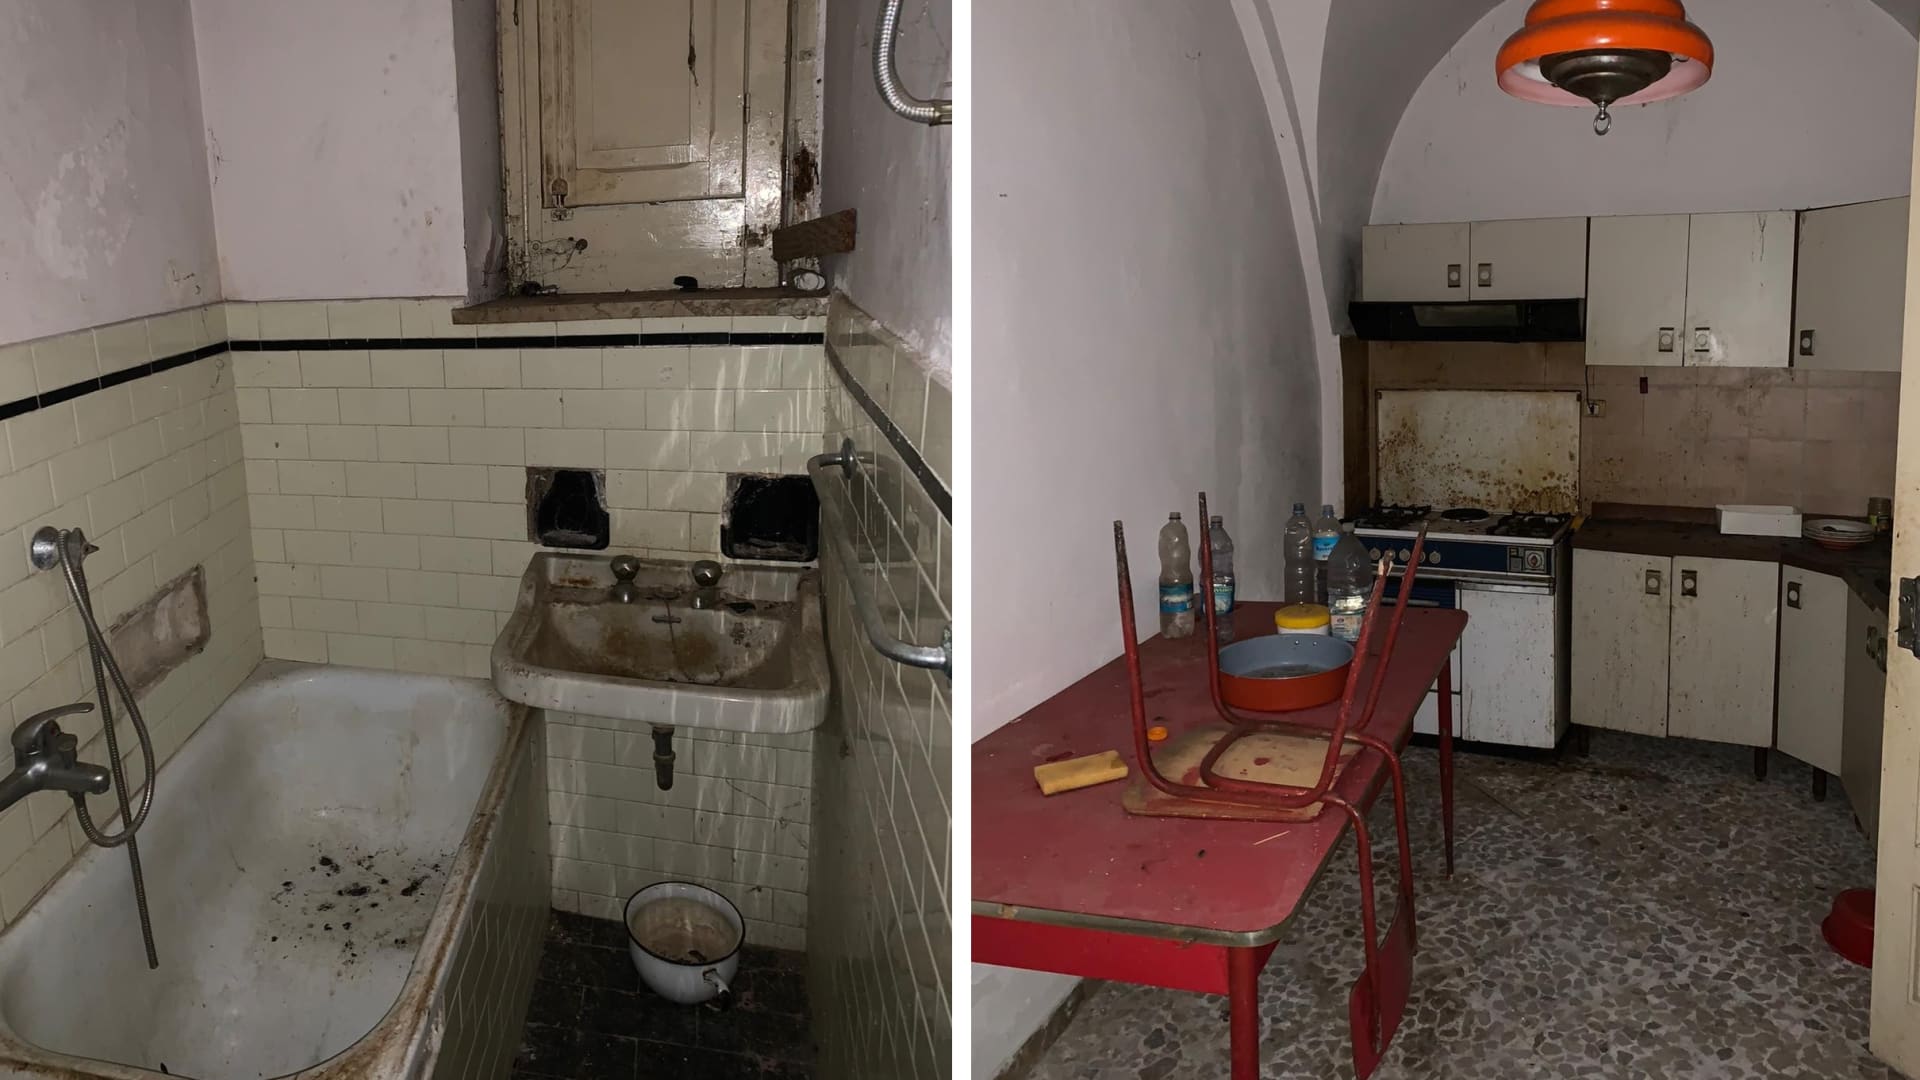 Meredith Tabbone bid 5,555 euros on a home, sight unseen, in Sambuca, Sicily, in 2019.